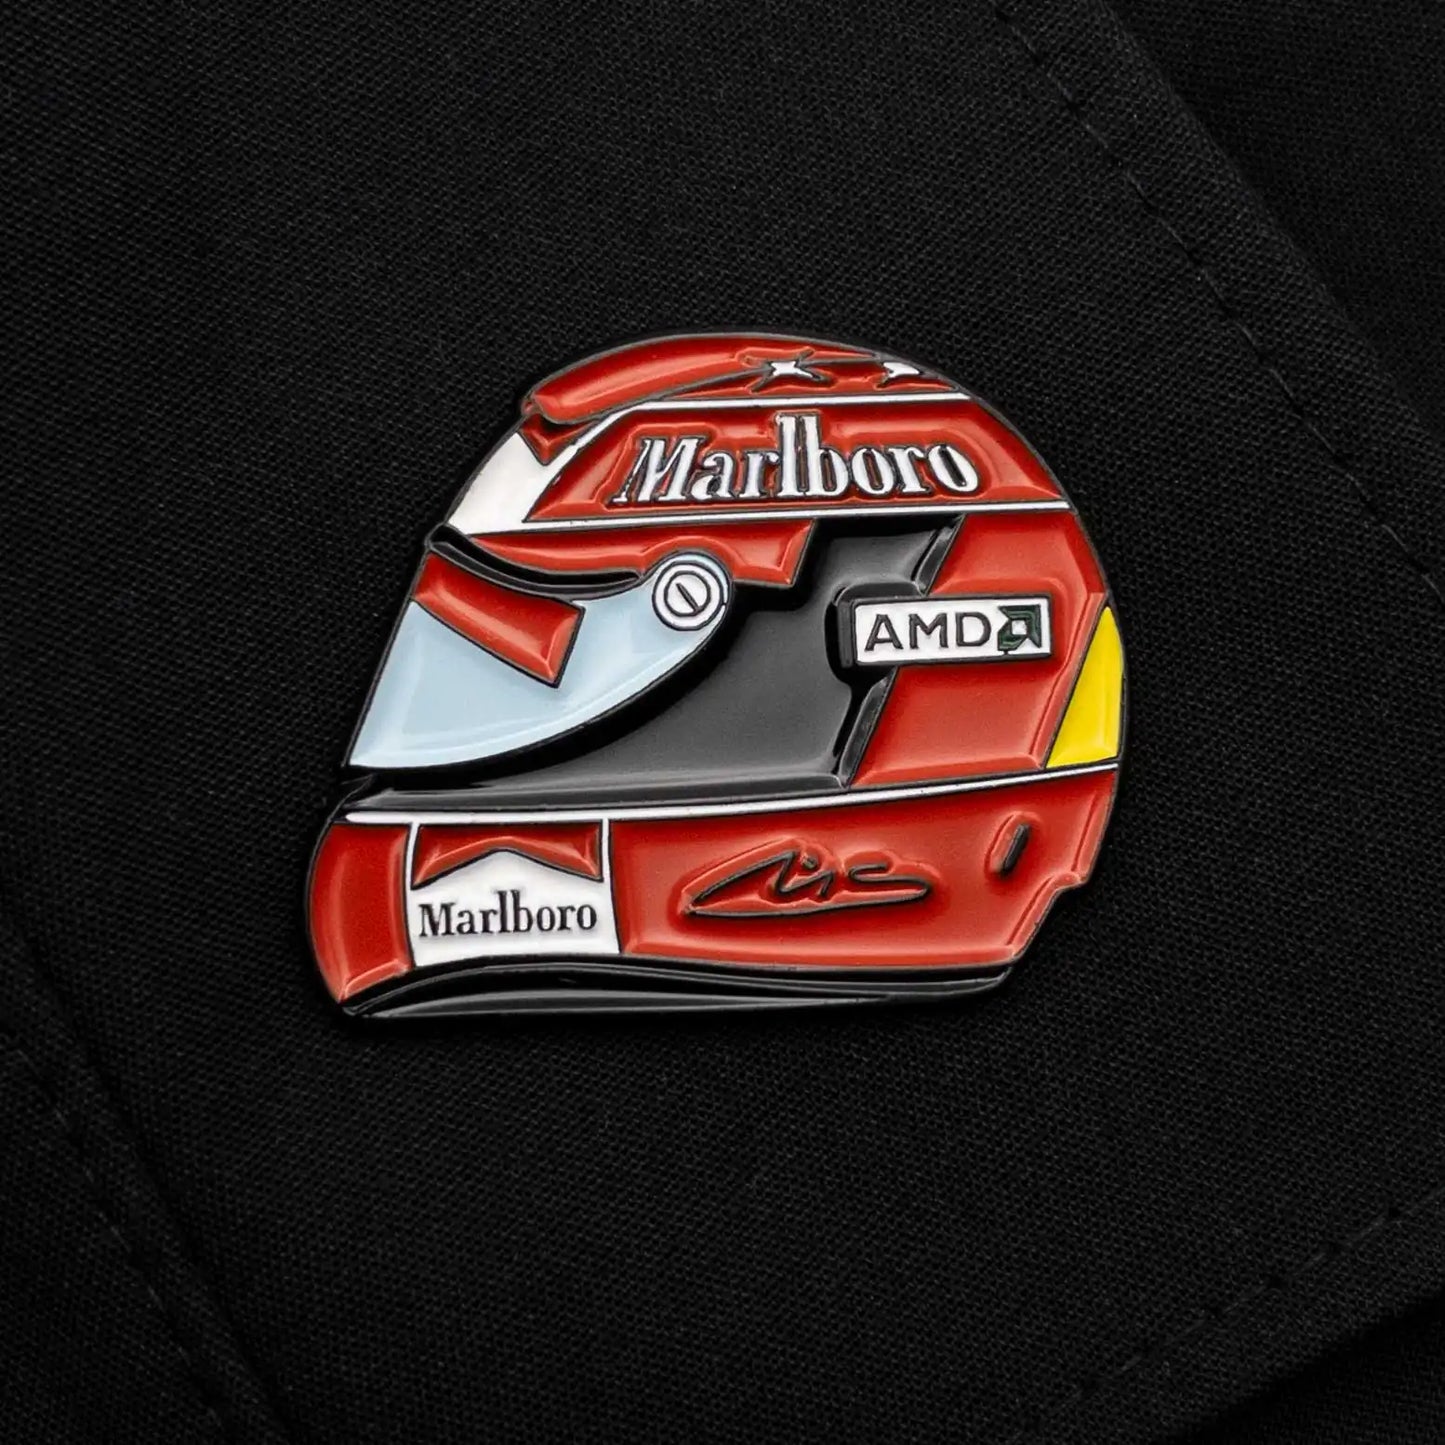 Michael Schumacher 2004 Helmet Enamel Pin shown on black clothes